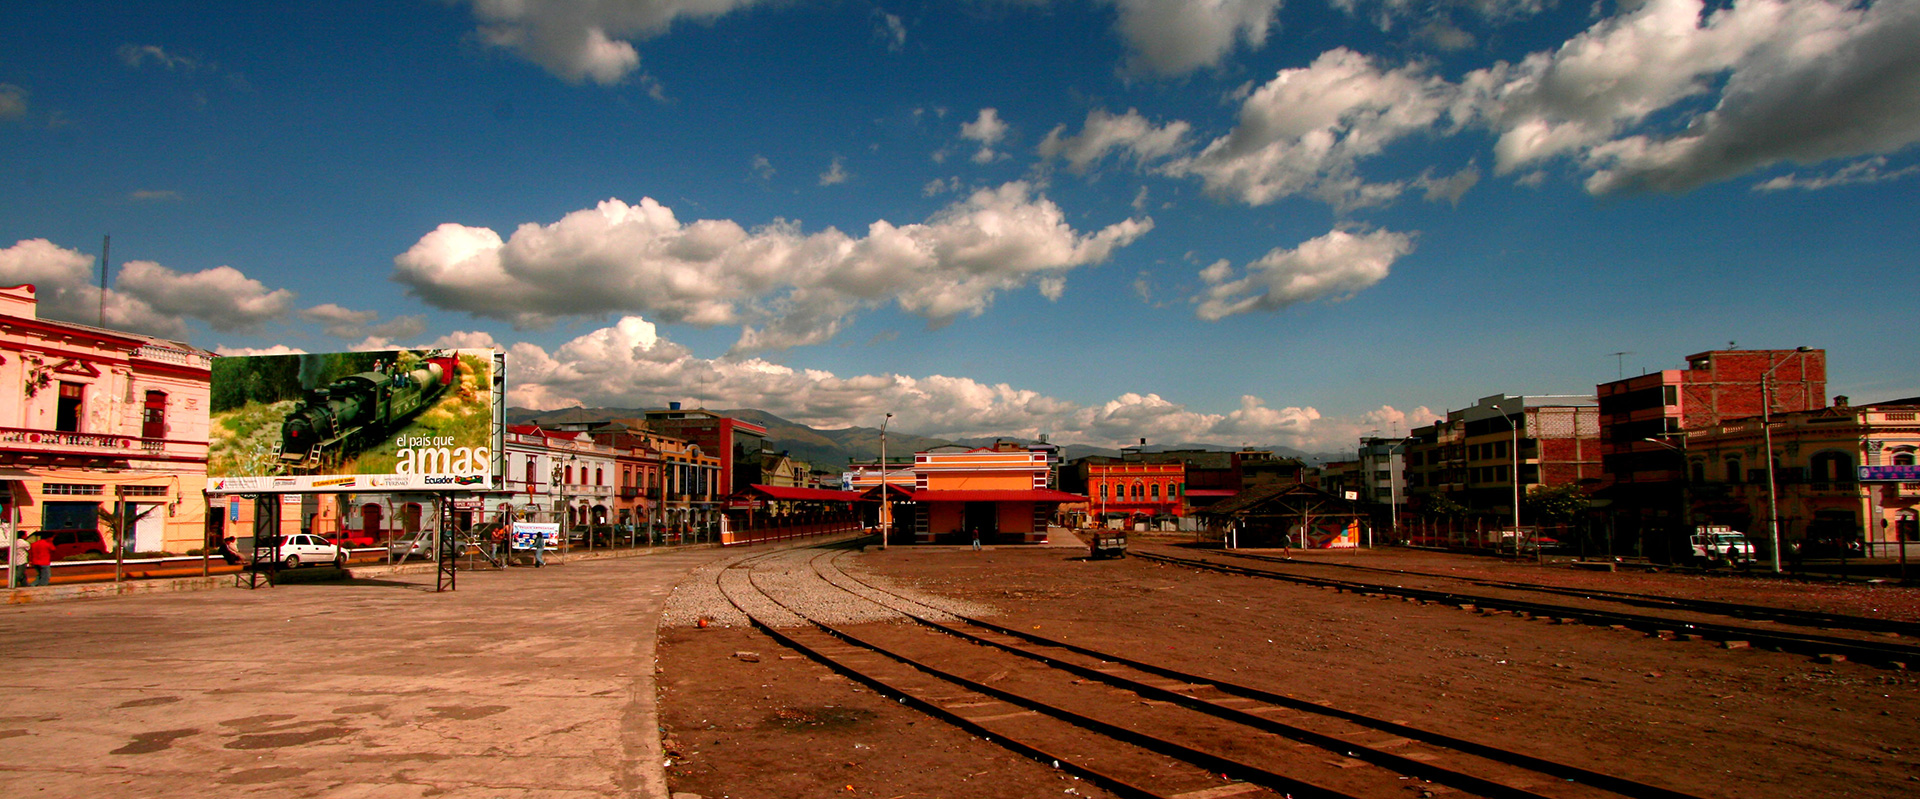 Riobamba Train Station